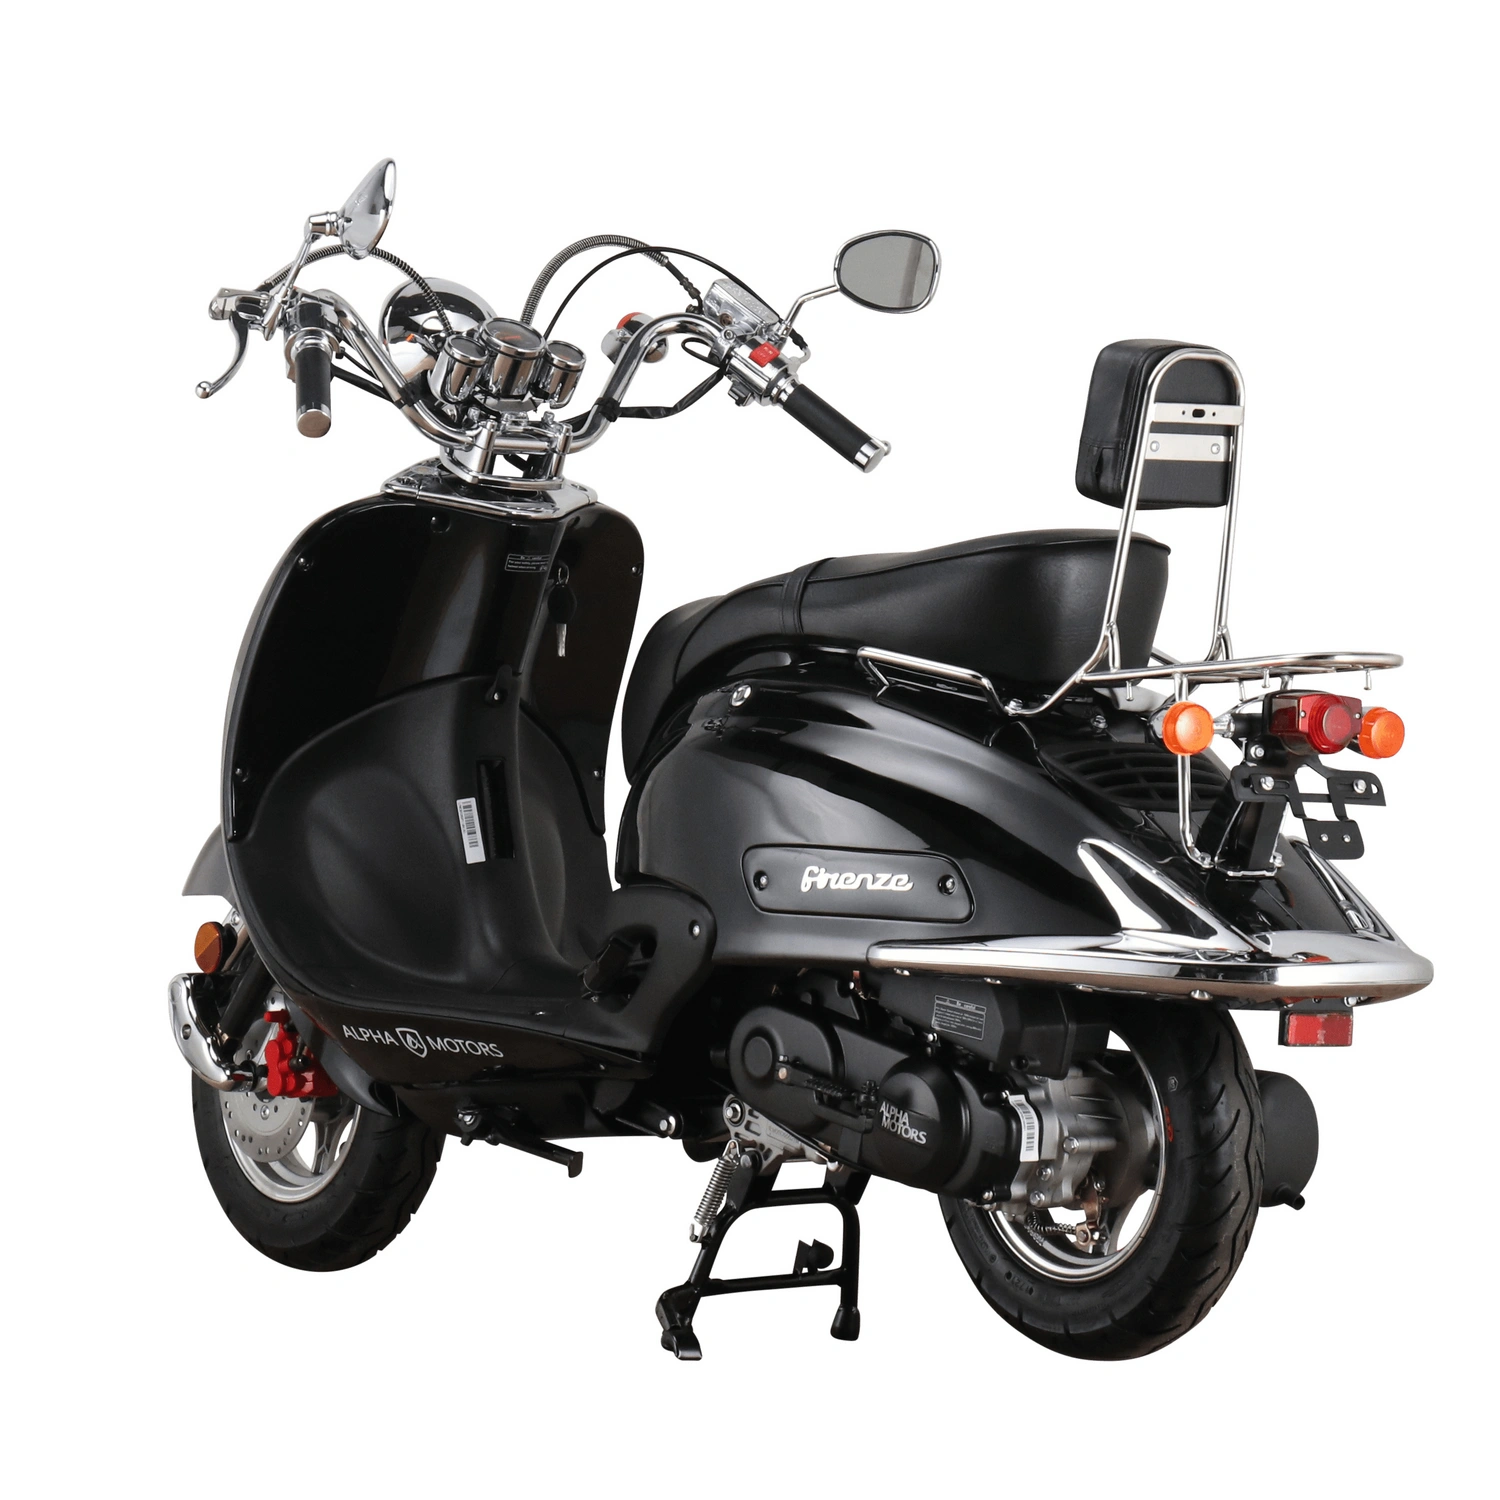 ALPHA MOTORS Motorroller »Firenze «, 125 cm³, 85 km/h, Euro 5